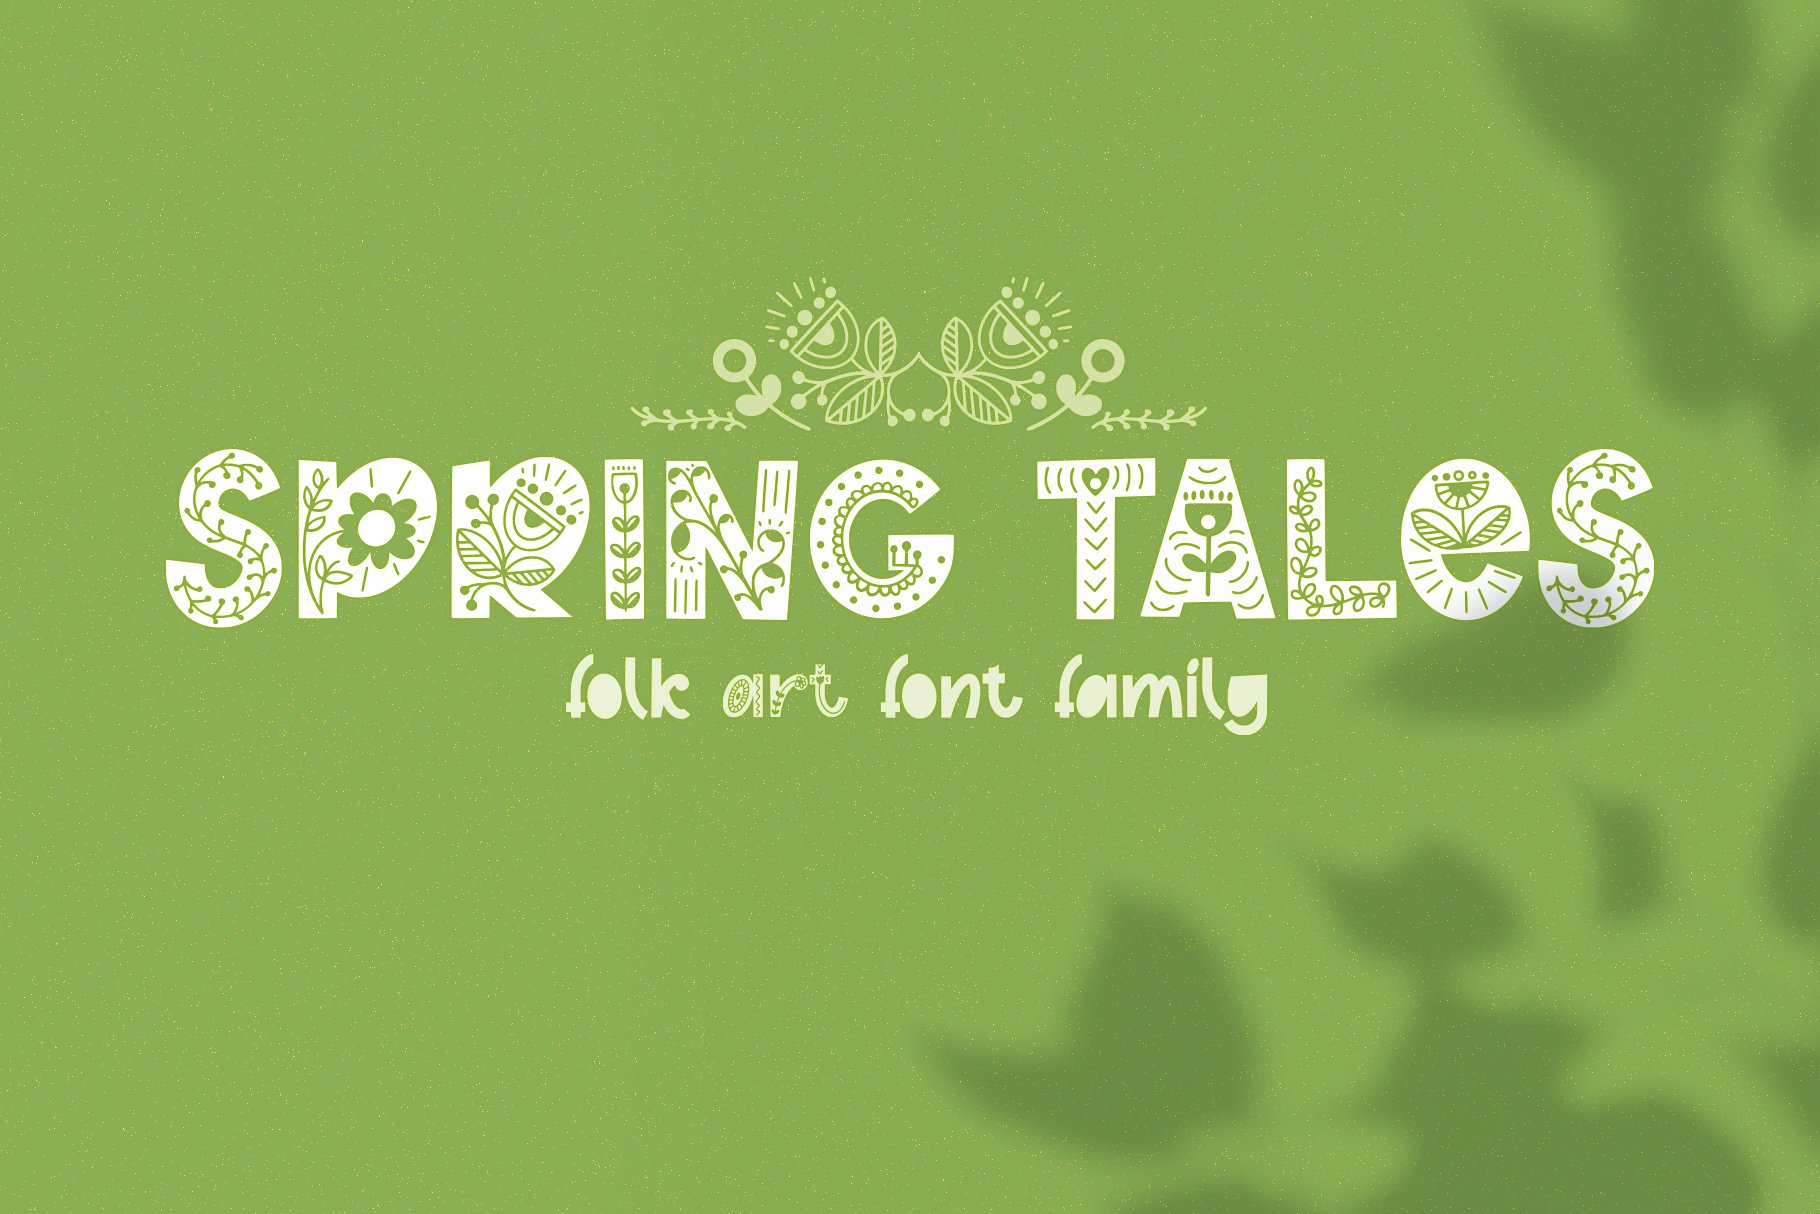 Spring Tales | Folk Art Font cover image.